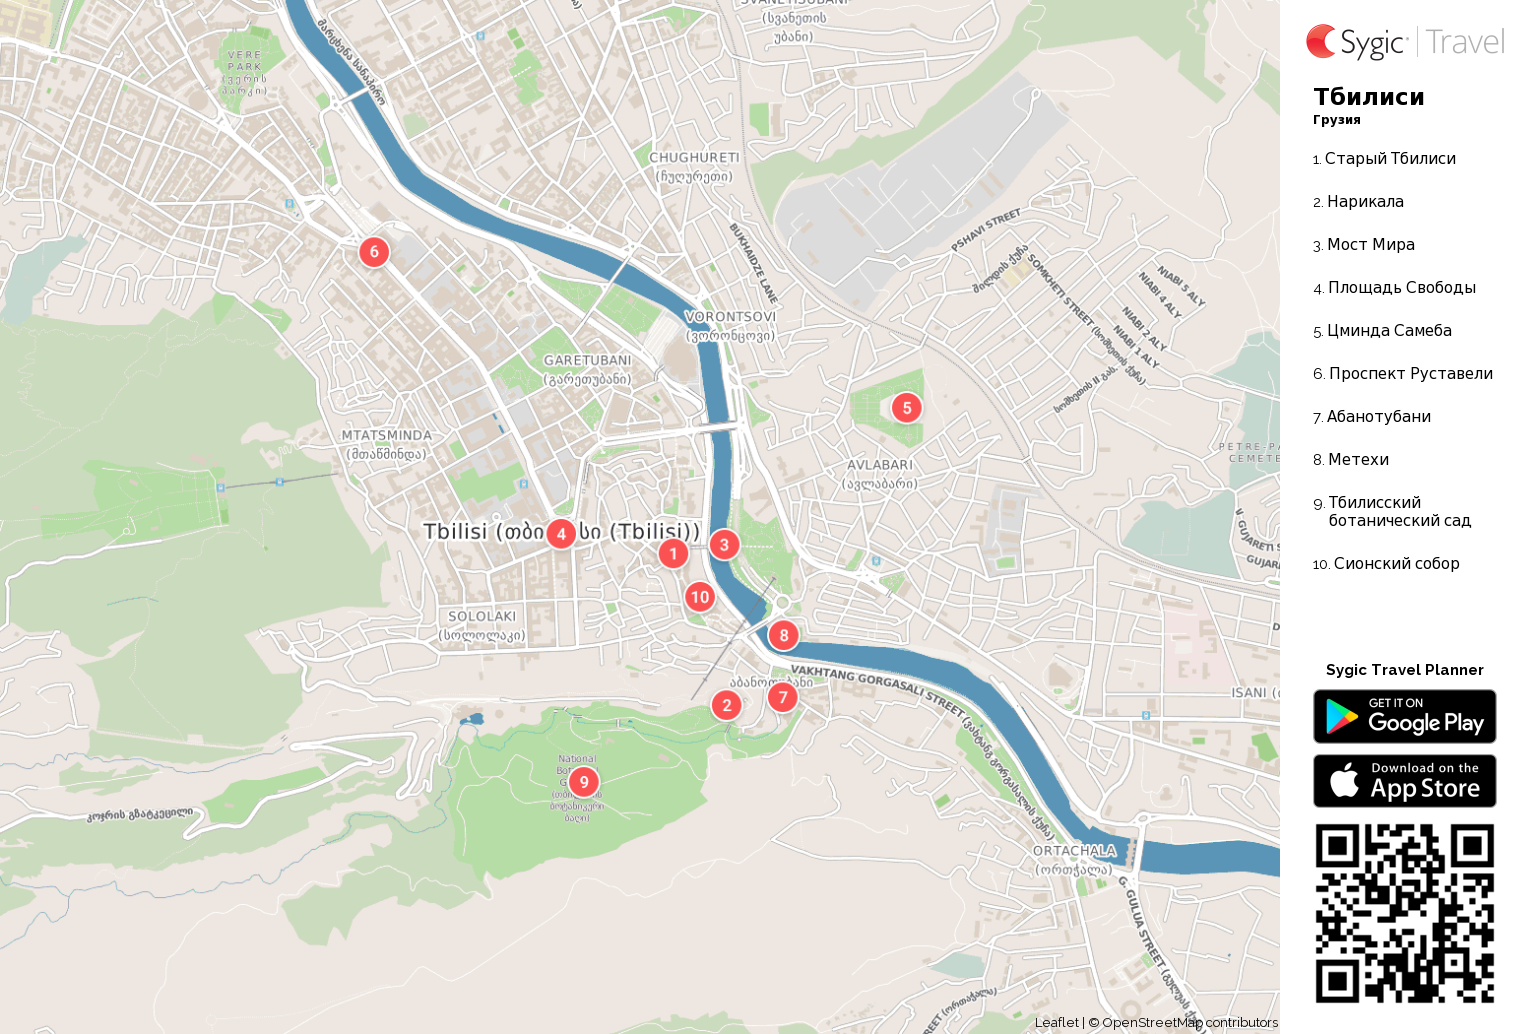 Code tbilisi. План города Тбилиси карта. Тбилиси Туристская карта. Тбилиси.Авчала.карта. Тбилиси центр города на карте.